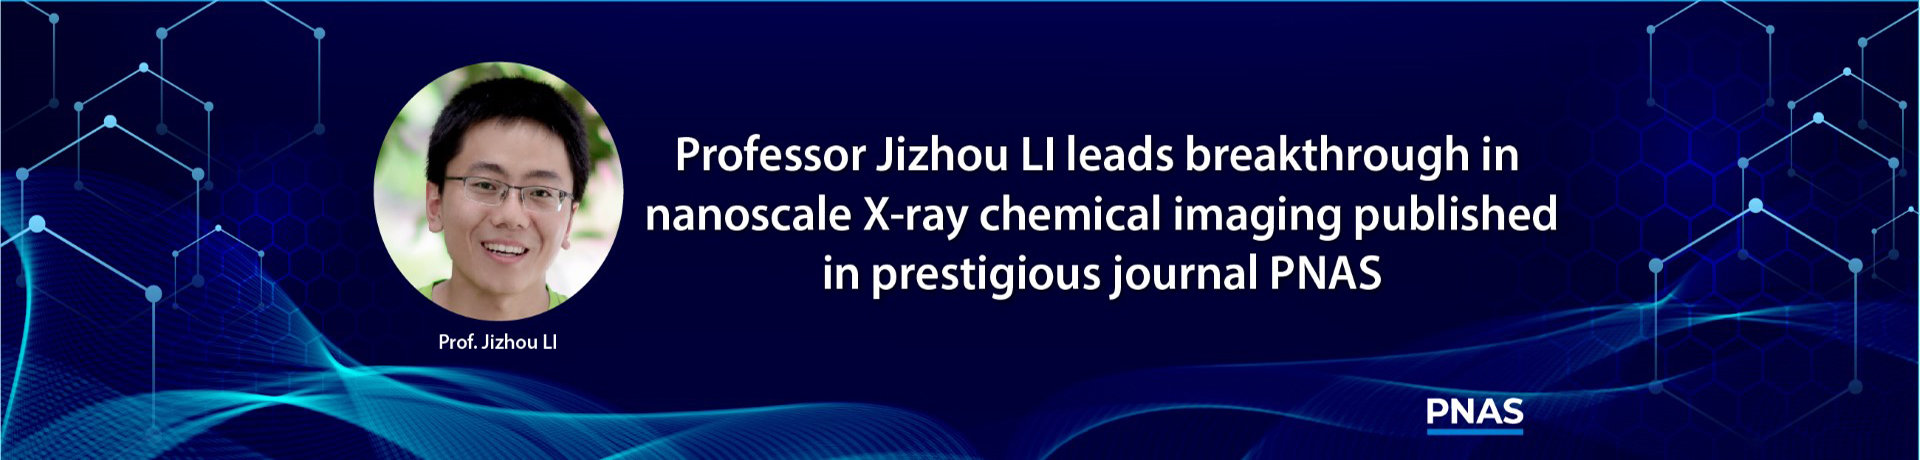 Professor Jizhou Li leads breakthrough in nanoscale X-ray chemical imaging published in prestigious journal PNAS